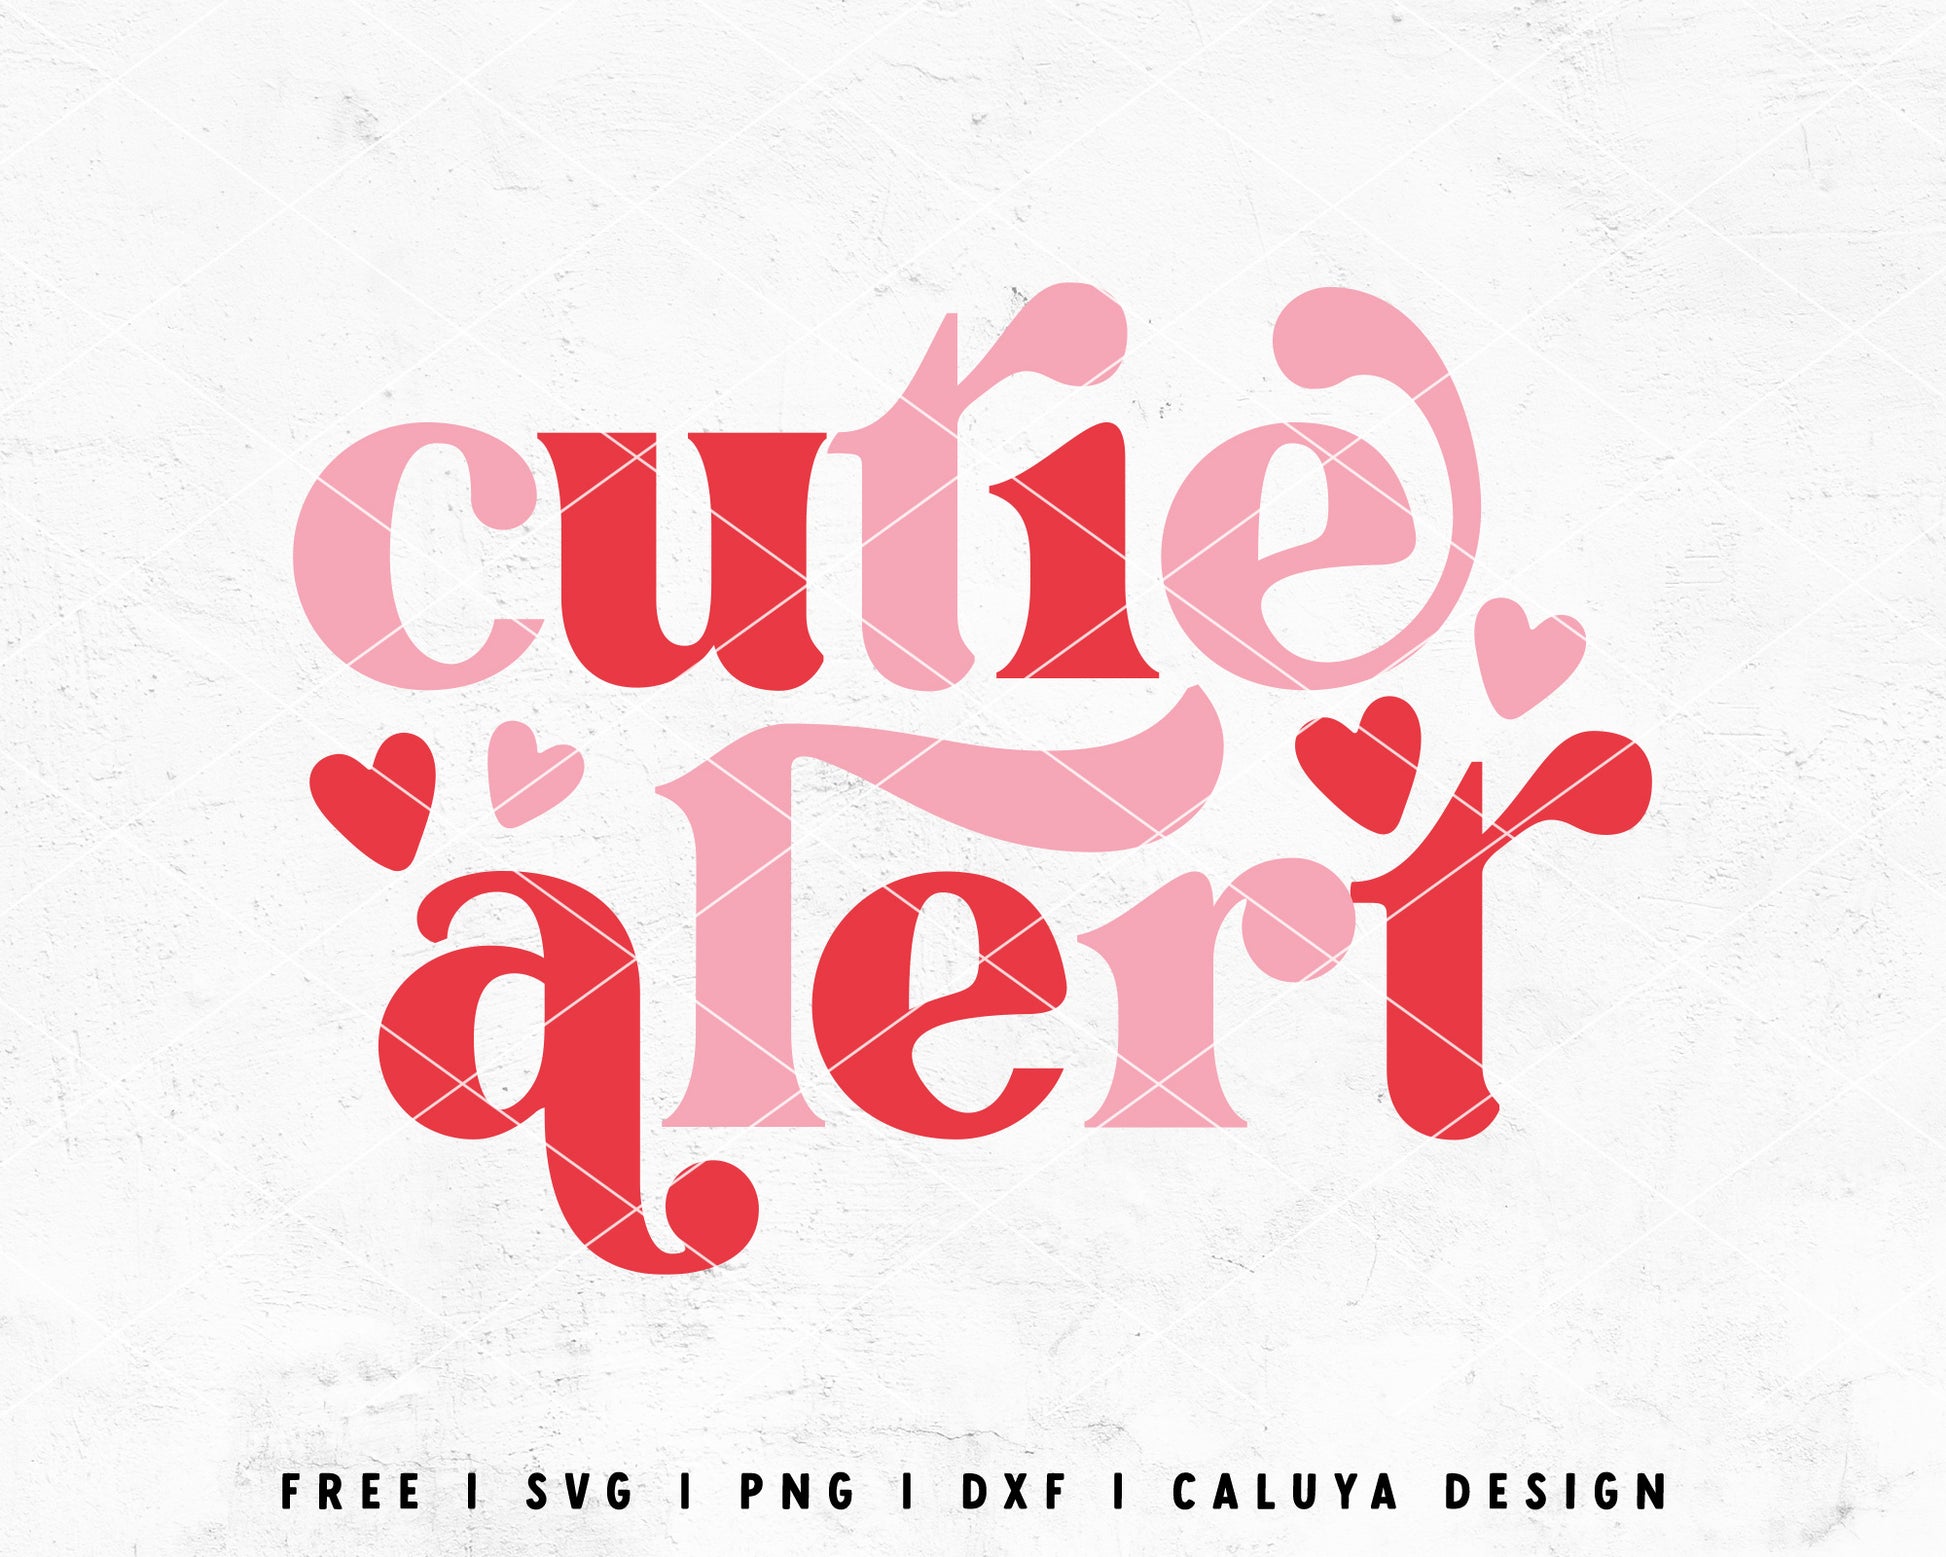 FREE Cutie Alert SVG | Valentine Day Quote SVG Cut File for Cricut, Cameo Silhouette | Free SVG Cut File